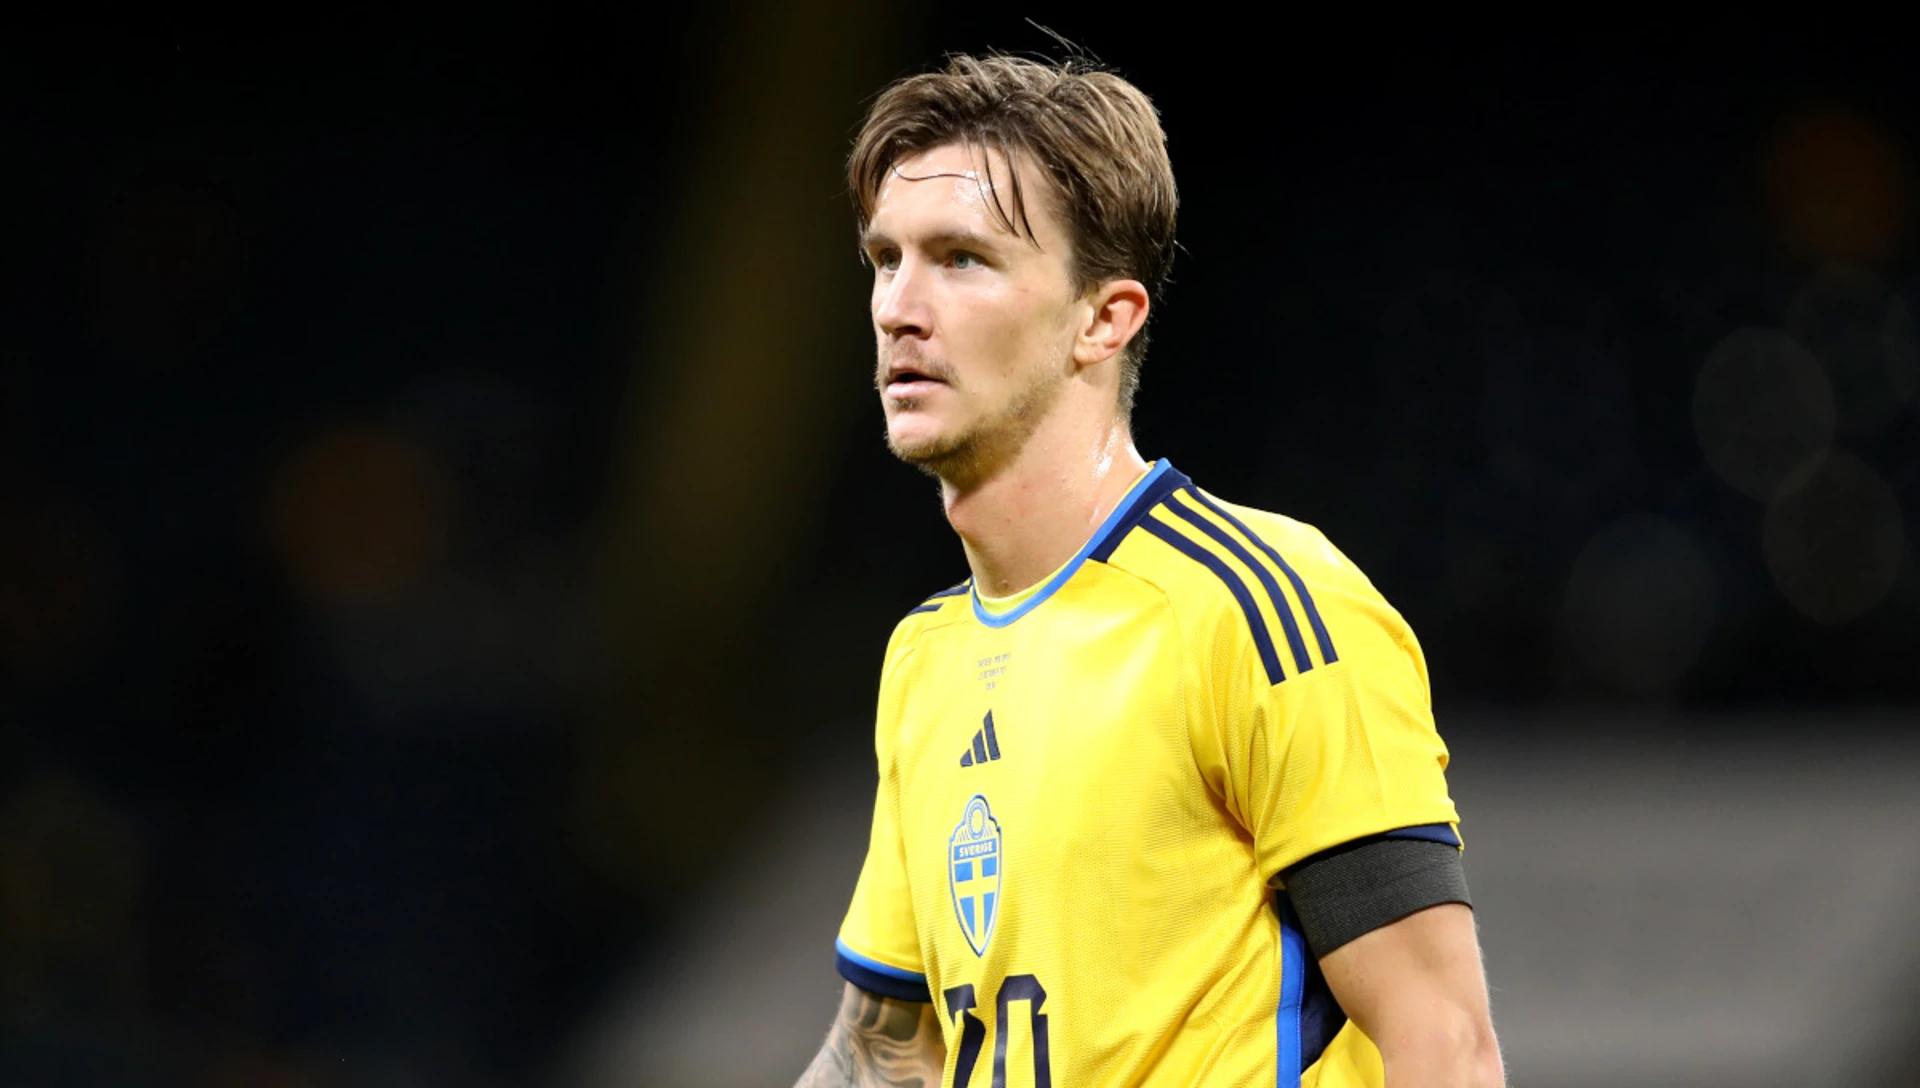 Swedish midfielder Olsson in rehab after brain illness: club